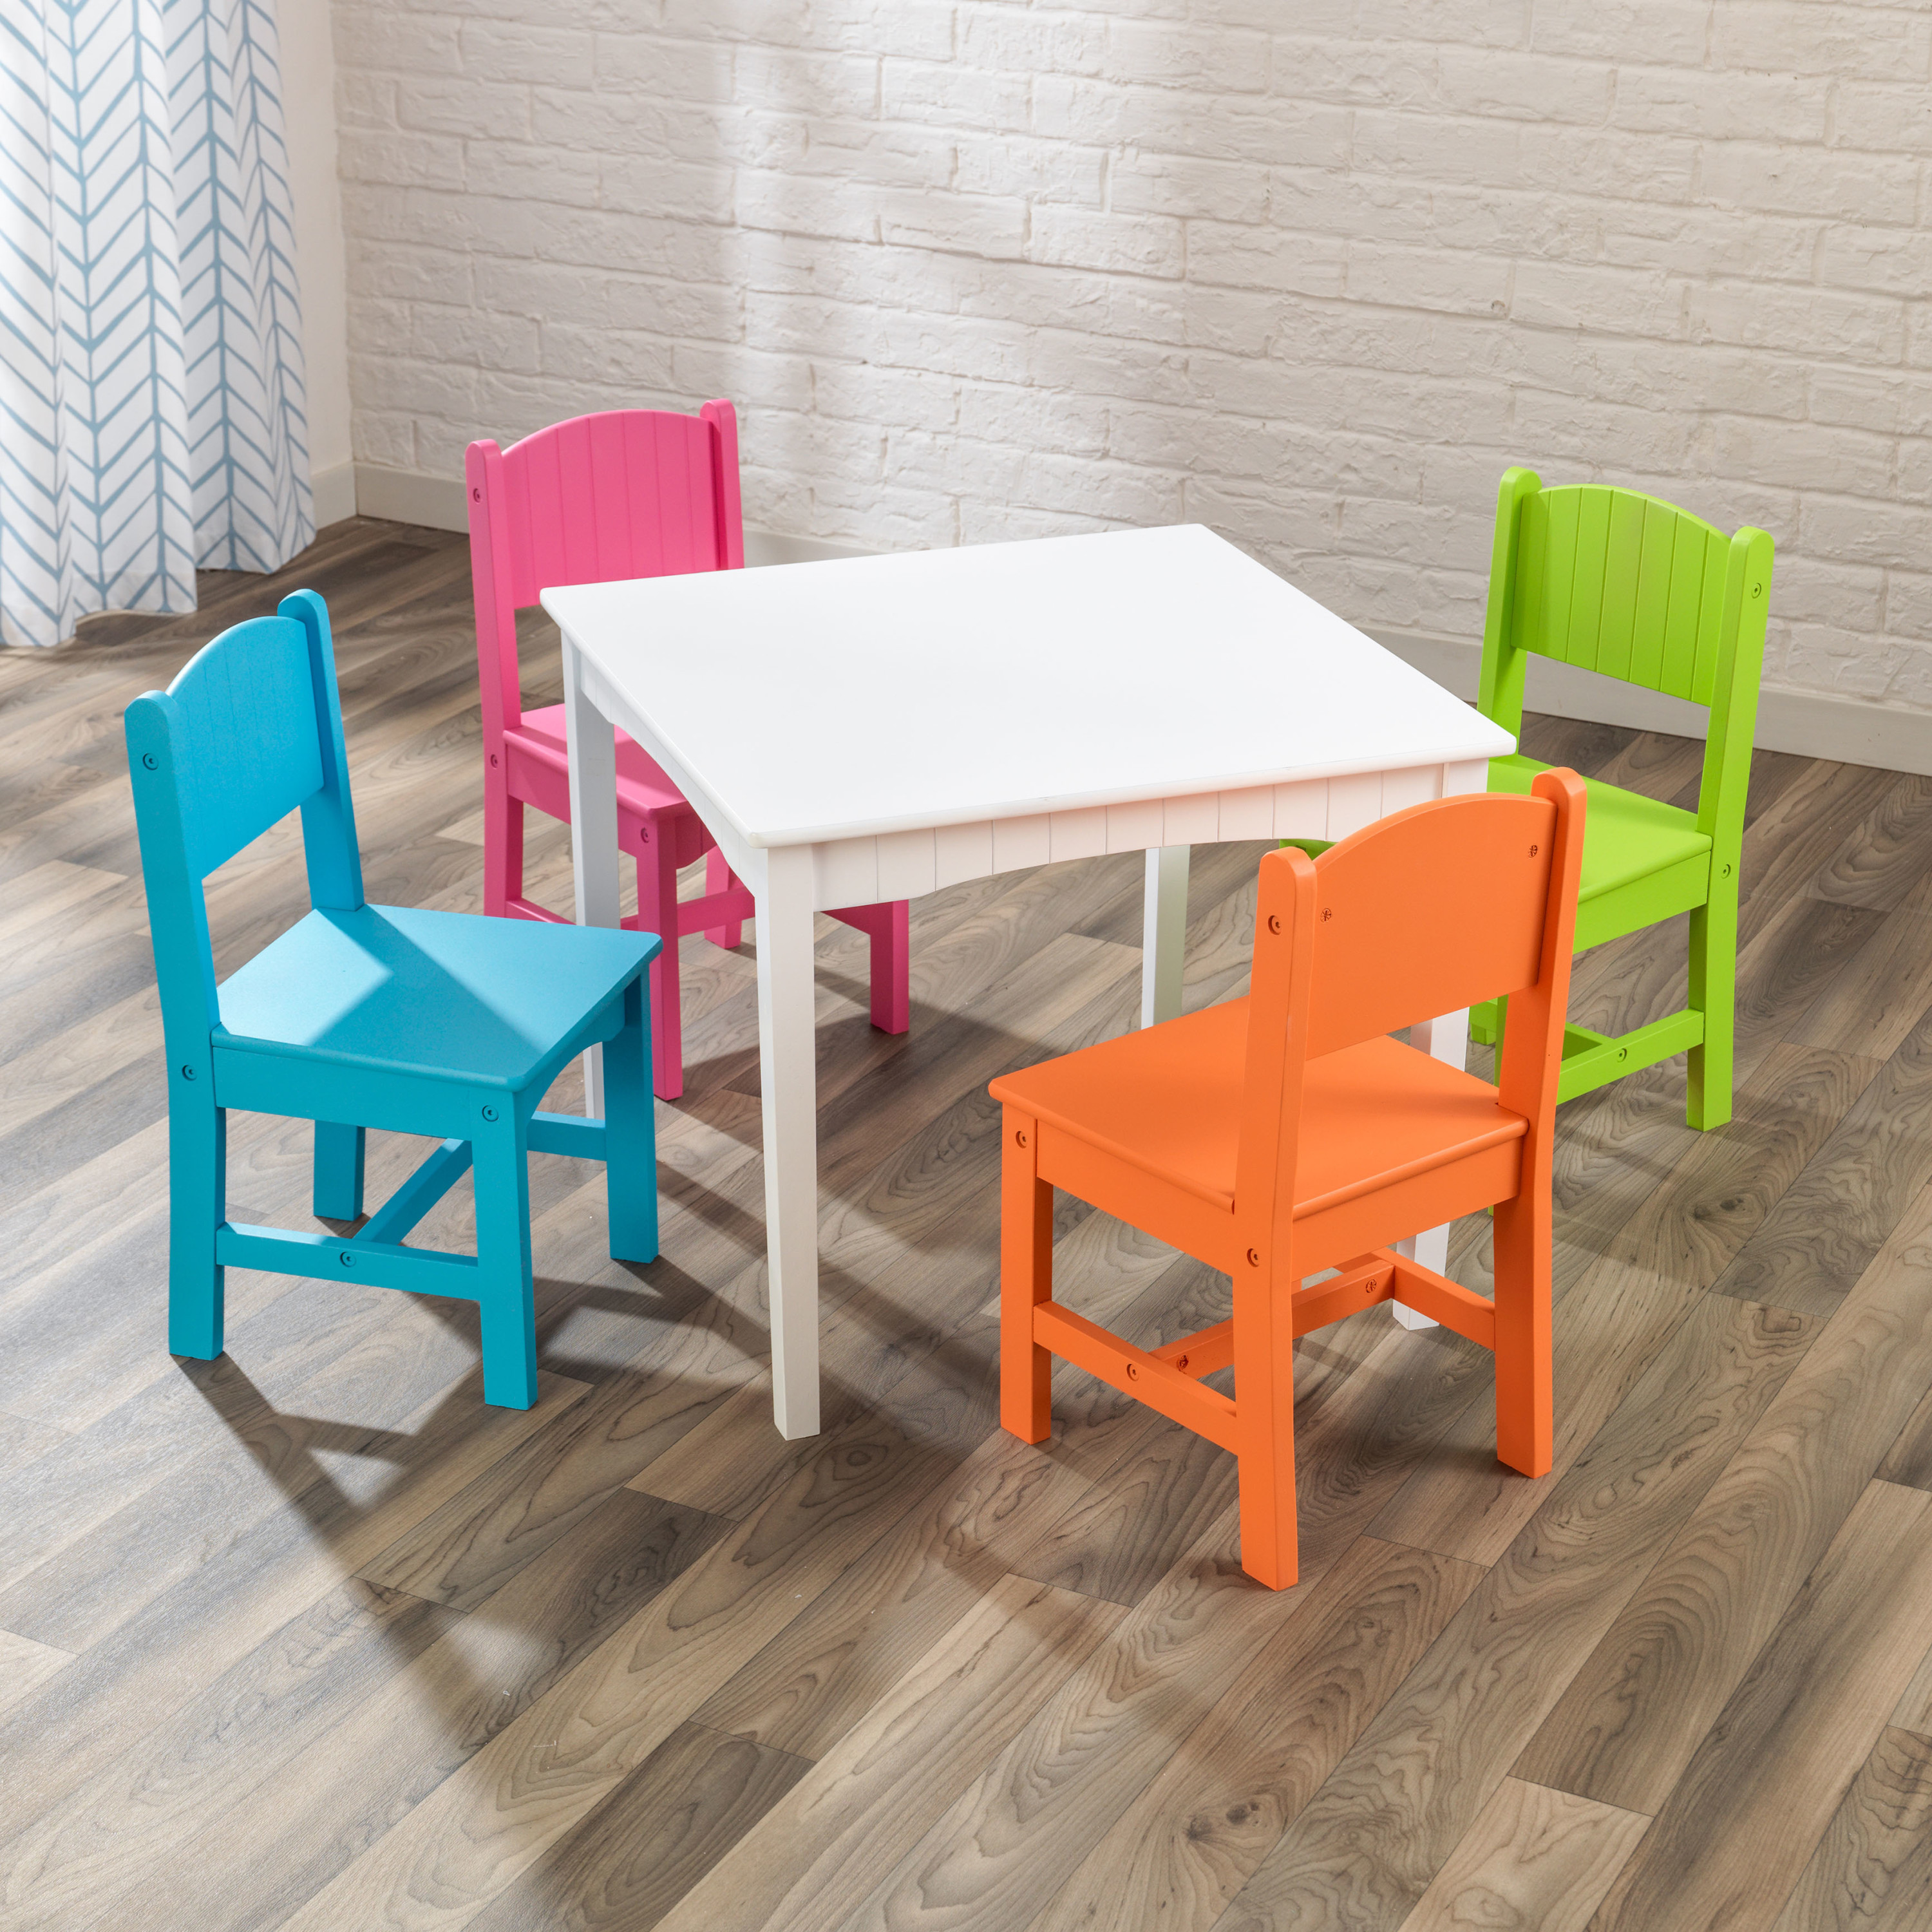 KidKraft Nantucket Table & 4 Chair Set, Bright - image 3 of 6